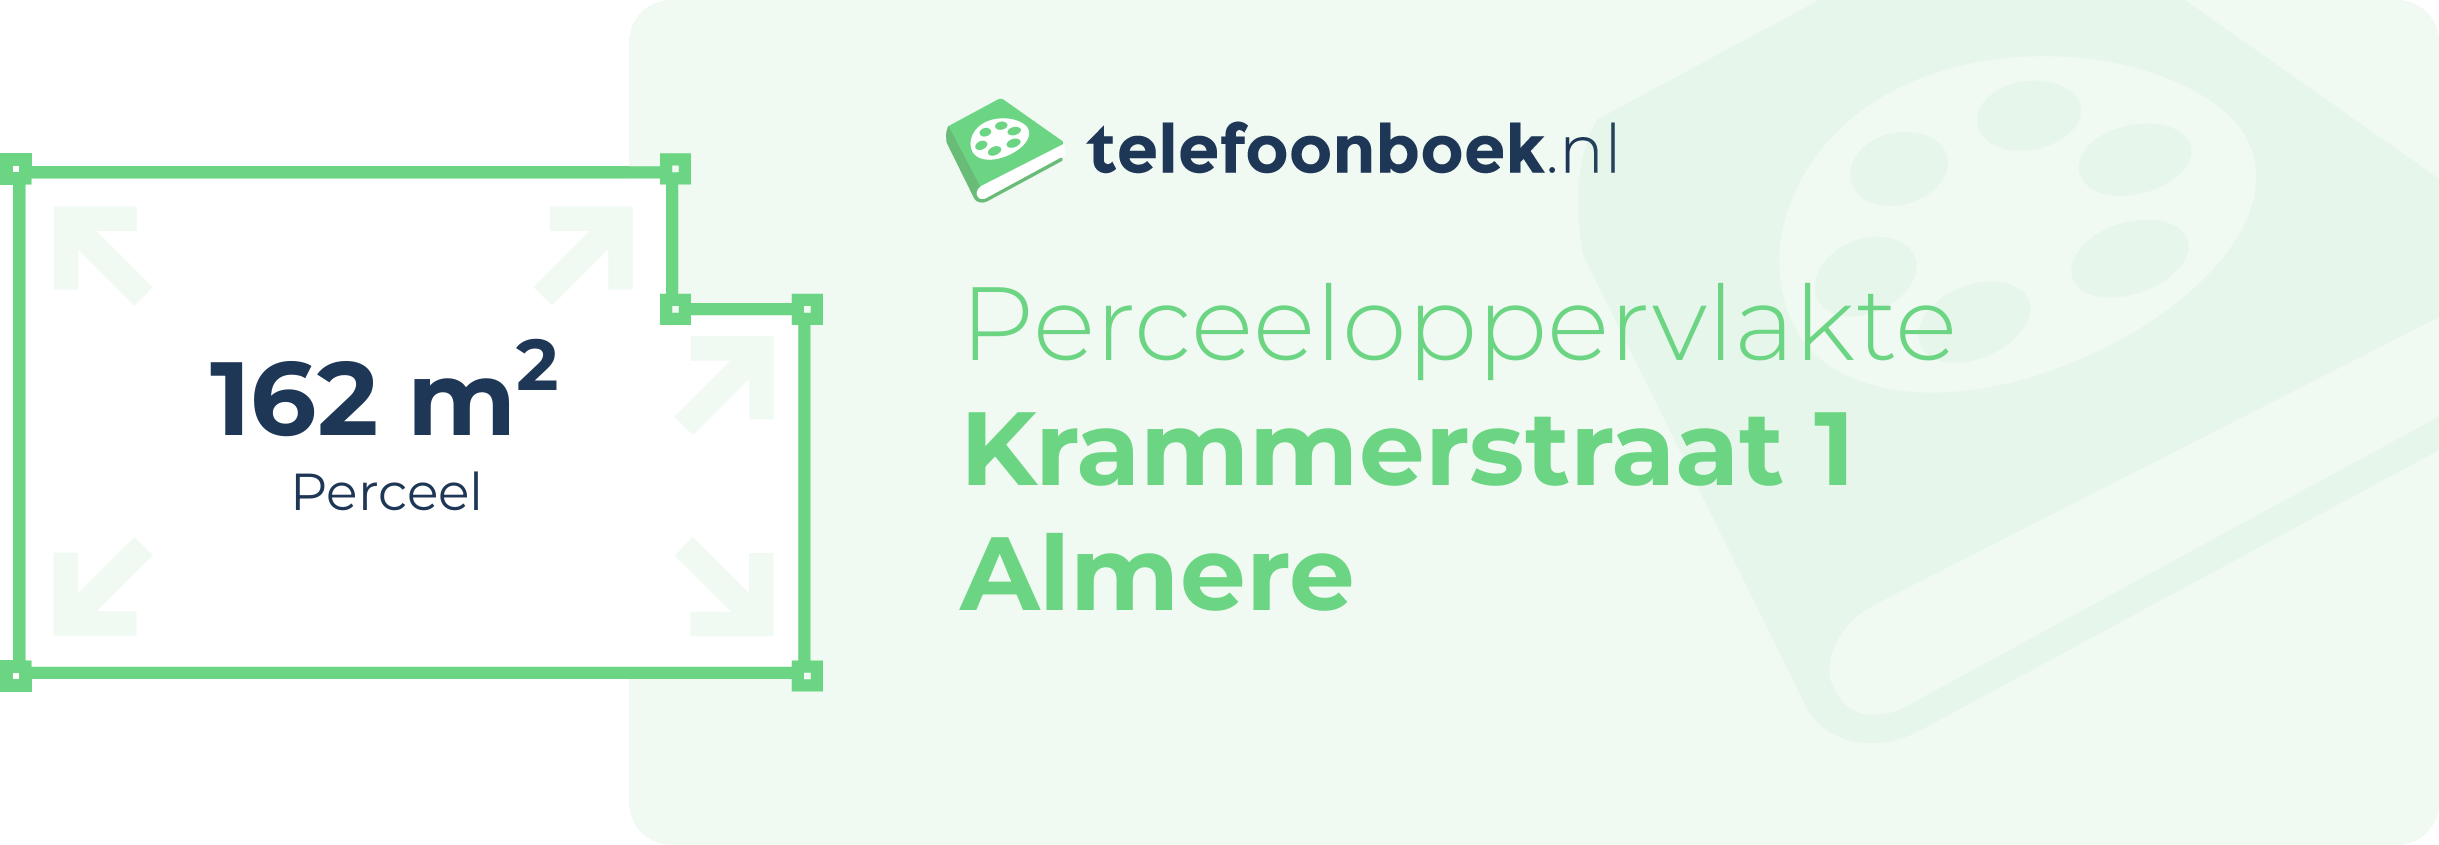 Perceeloppervlakte Krammerstraat 1 Almere